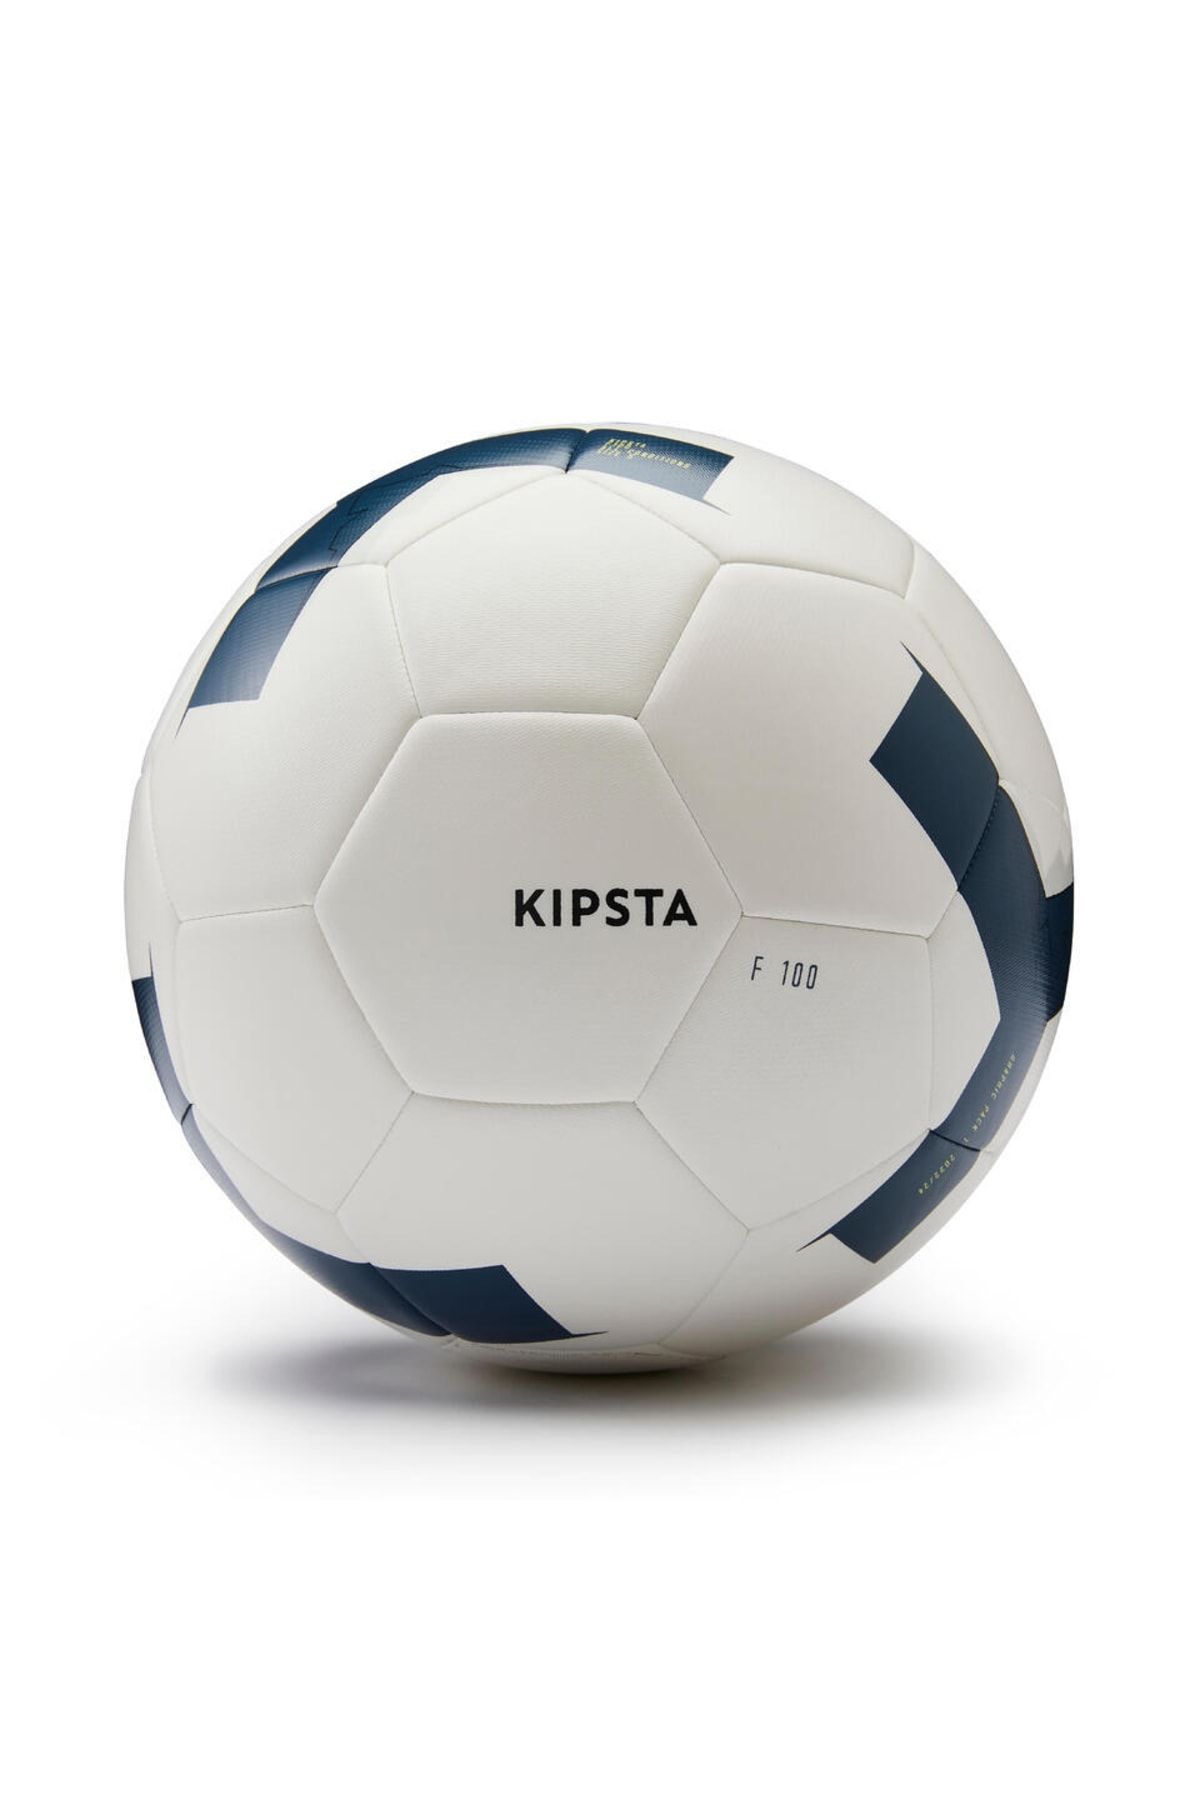 kipsta - Futbol Topu F100 5 Numara Beyaz